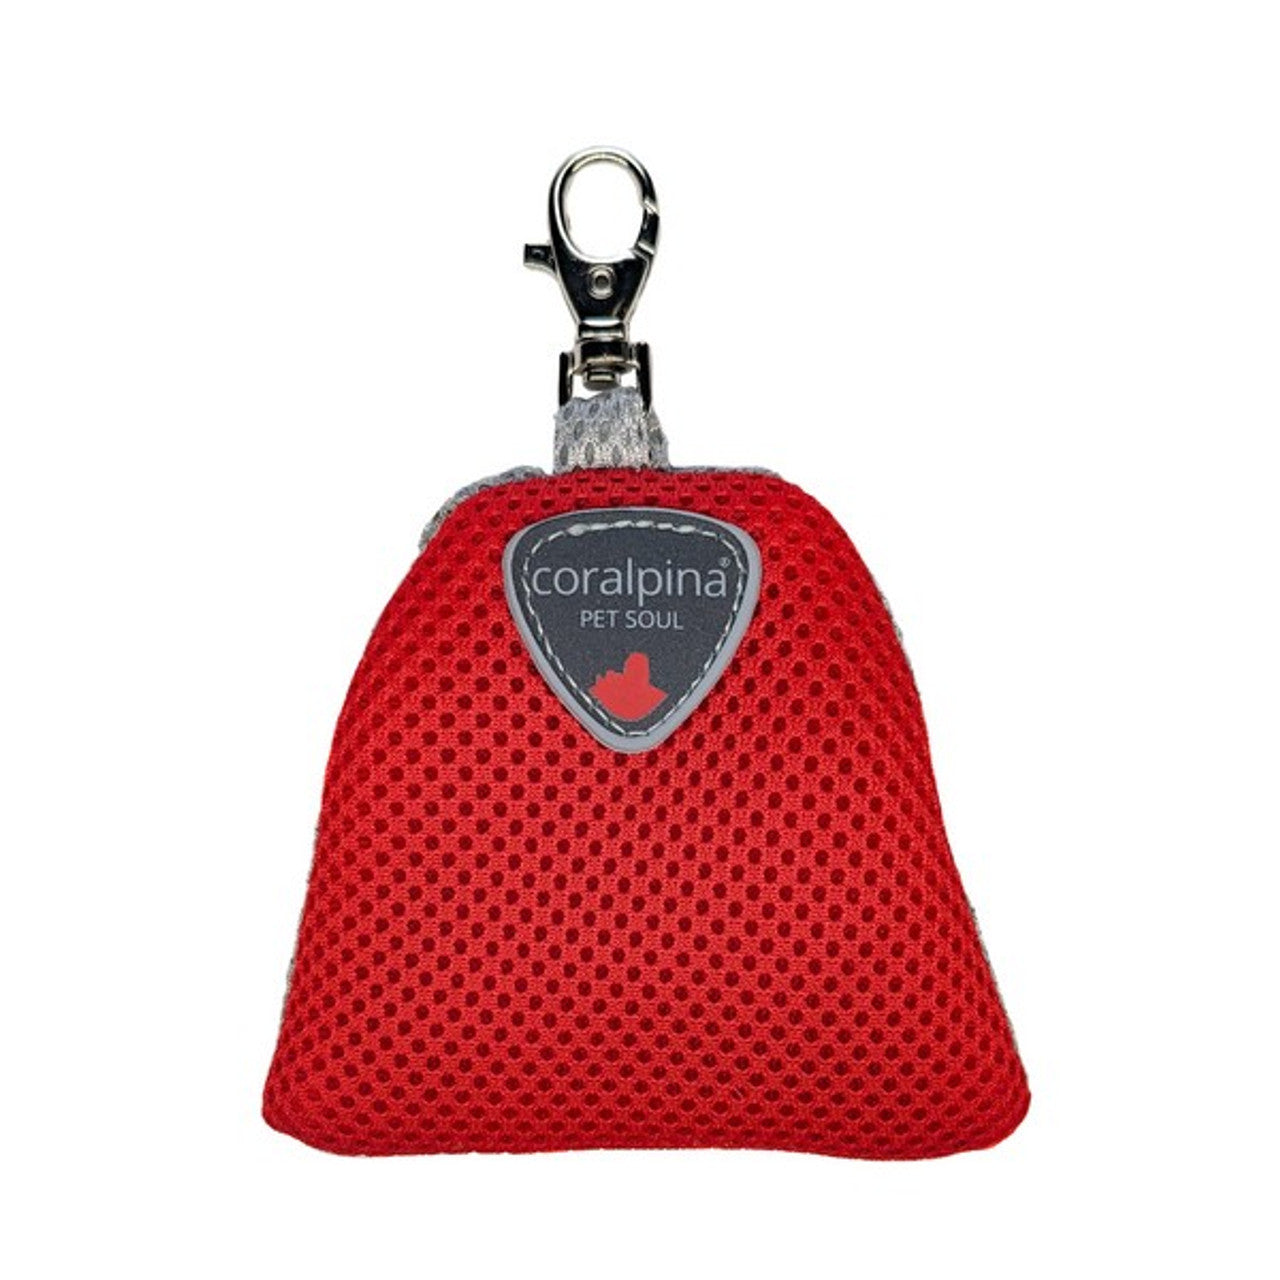 Coralpina Zainello Poop Bag Dispenser (Red)